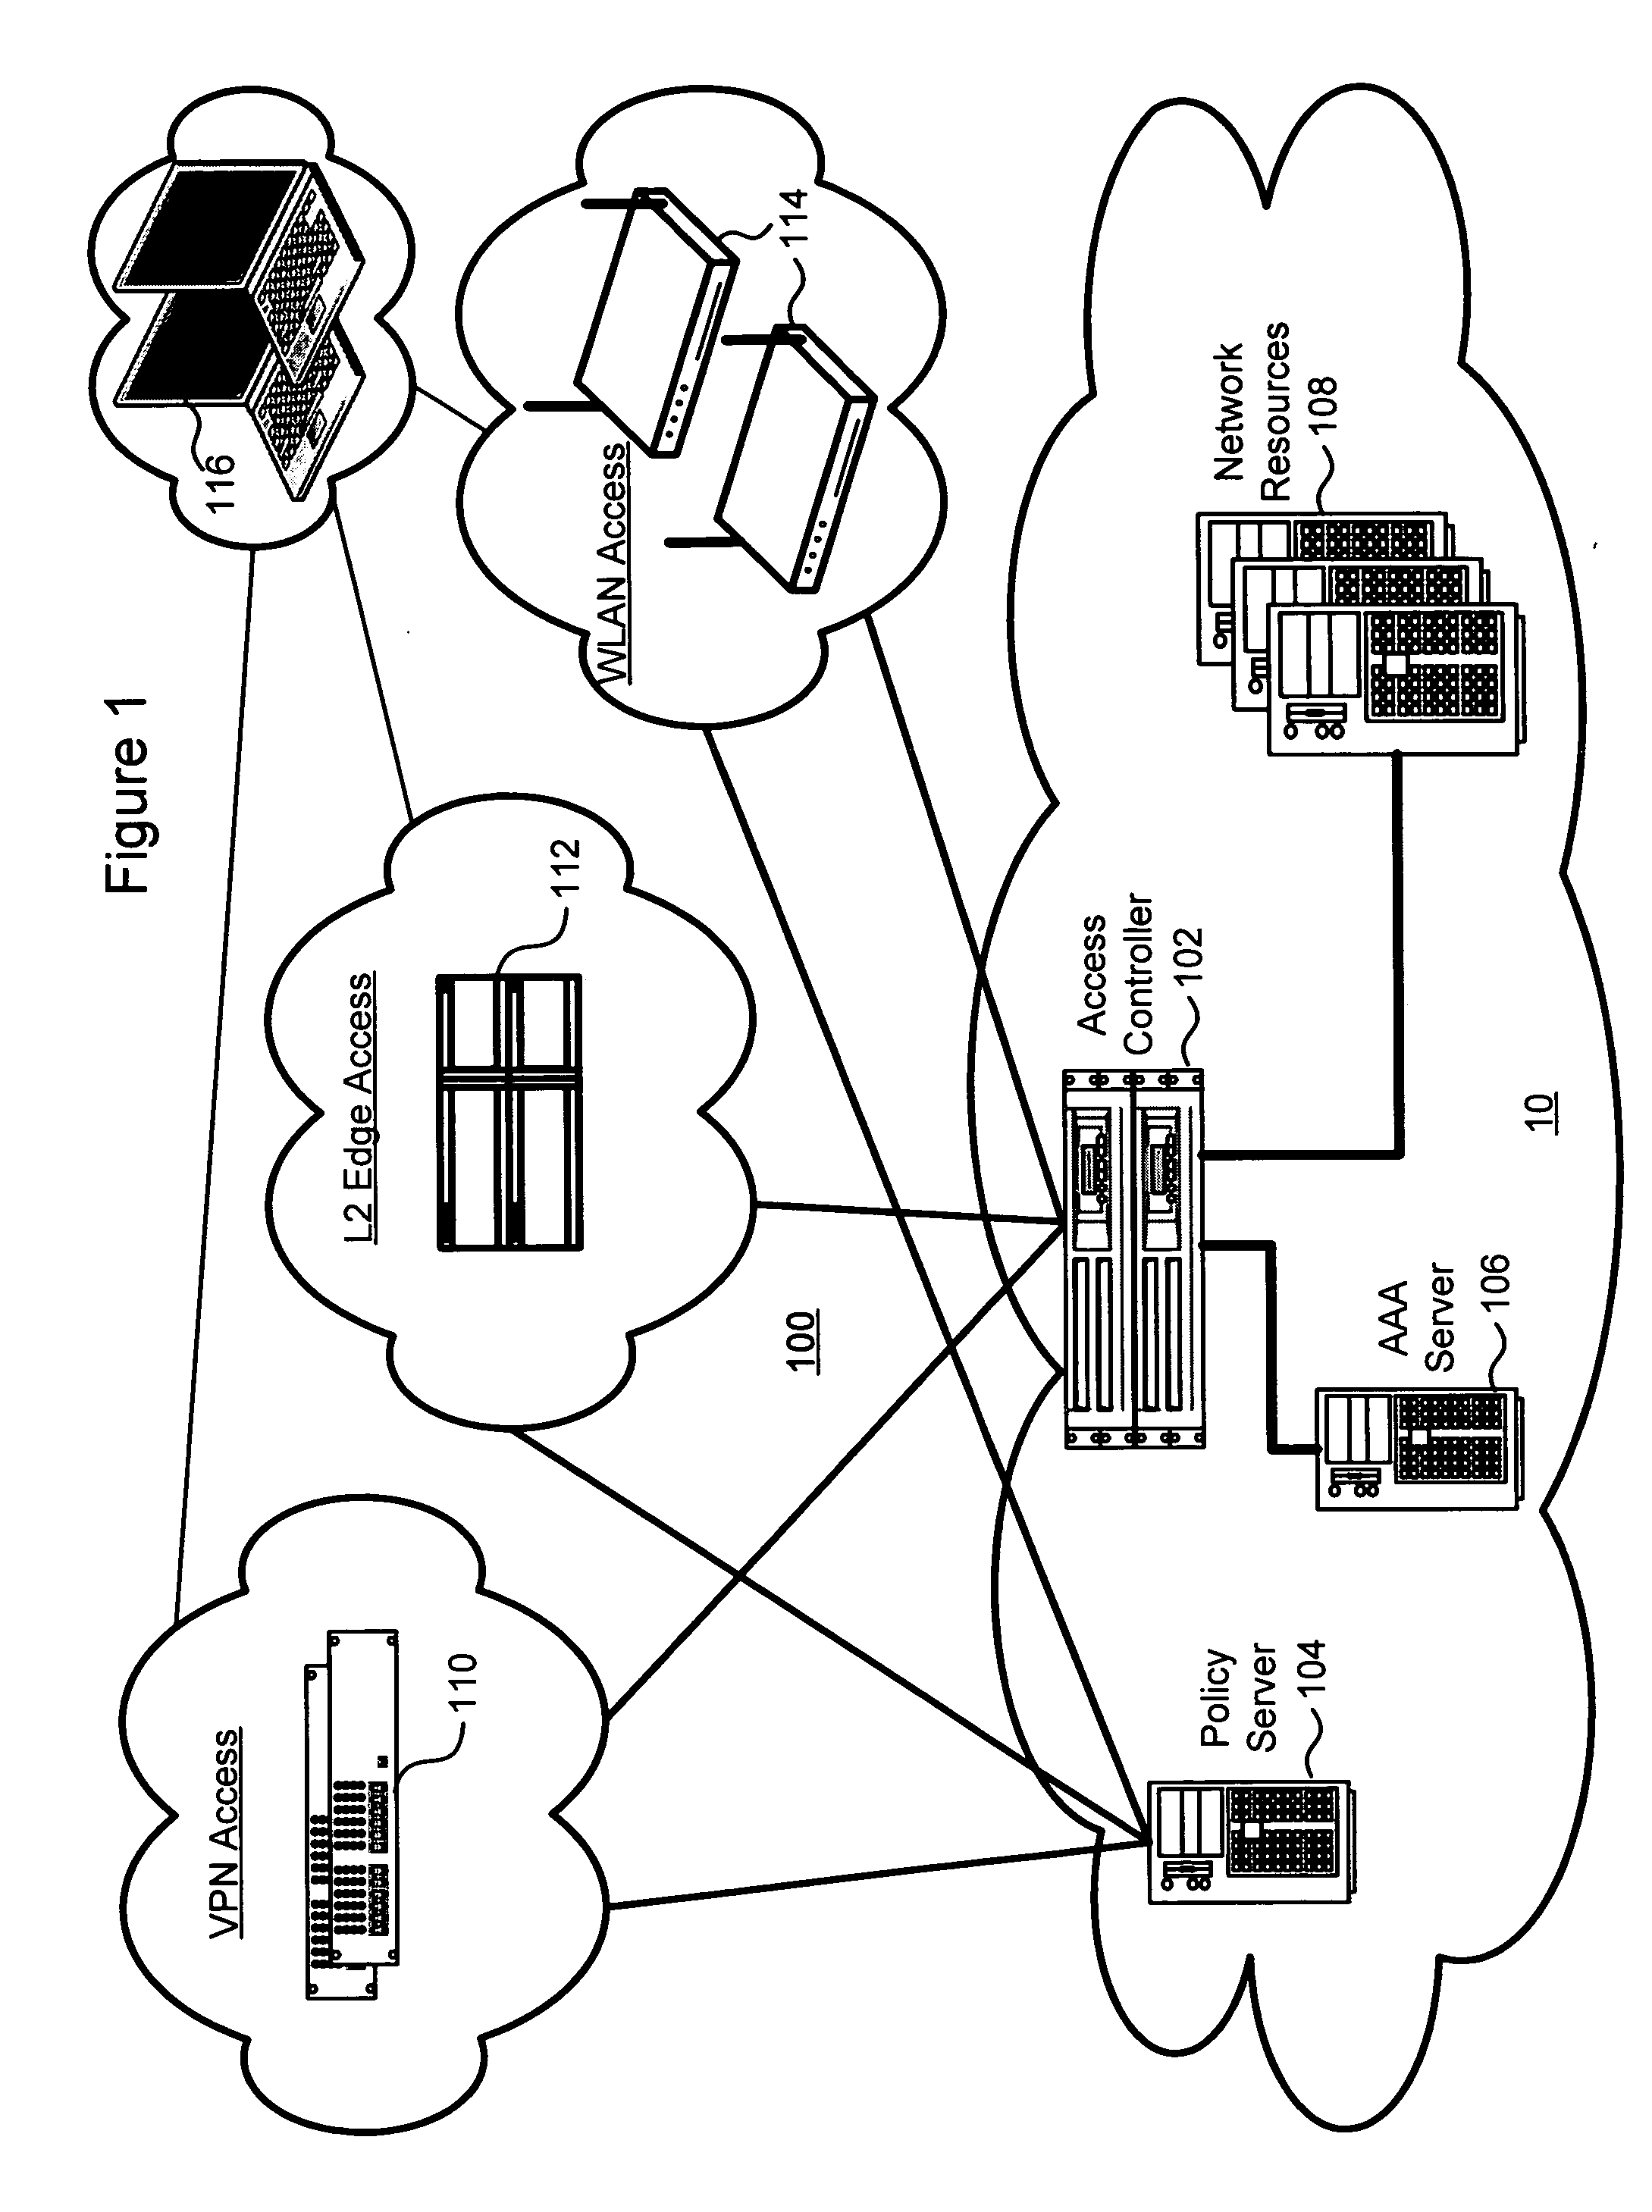 Technique for providing secure network access